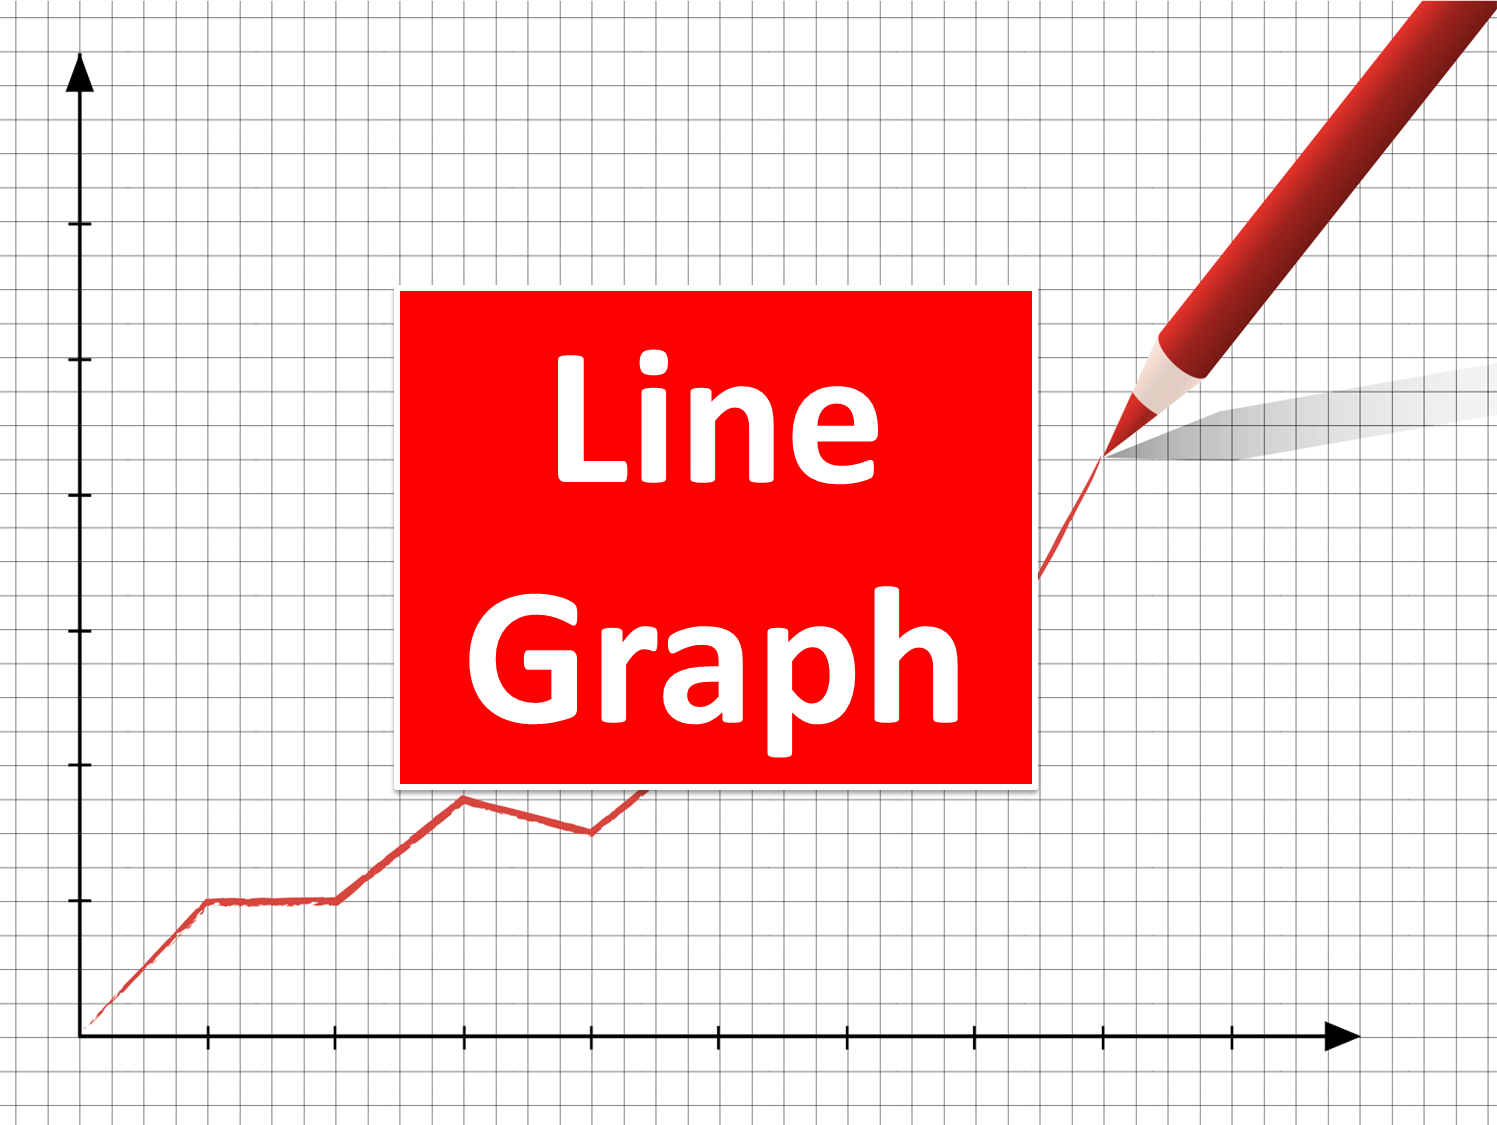 Line Graph - Data Interpretation